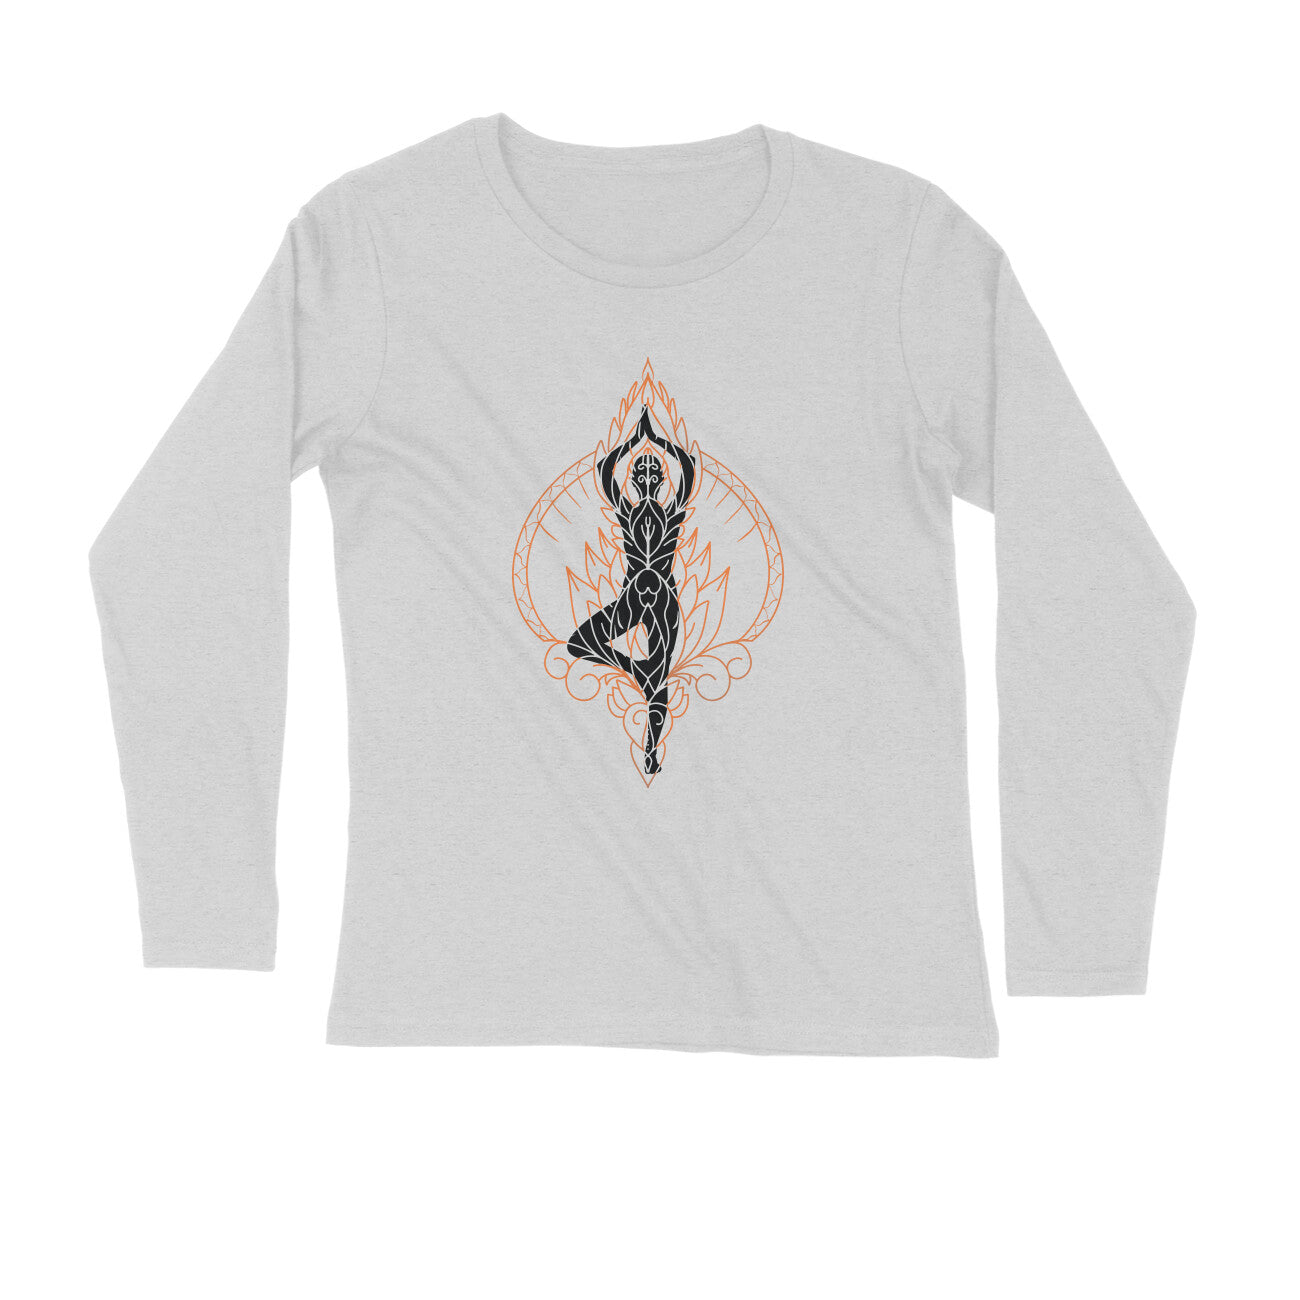 Yoga and Meditation Printed Full Sleeves T-Shirt